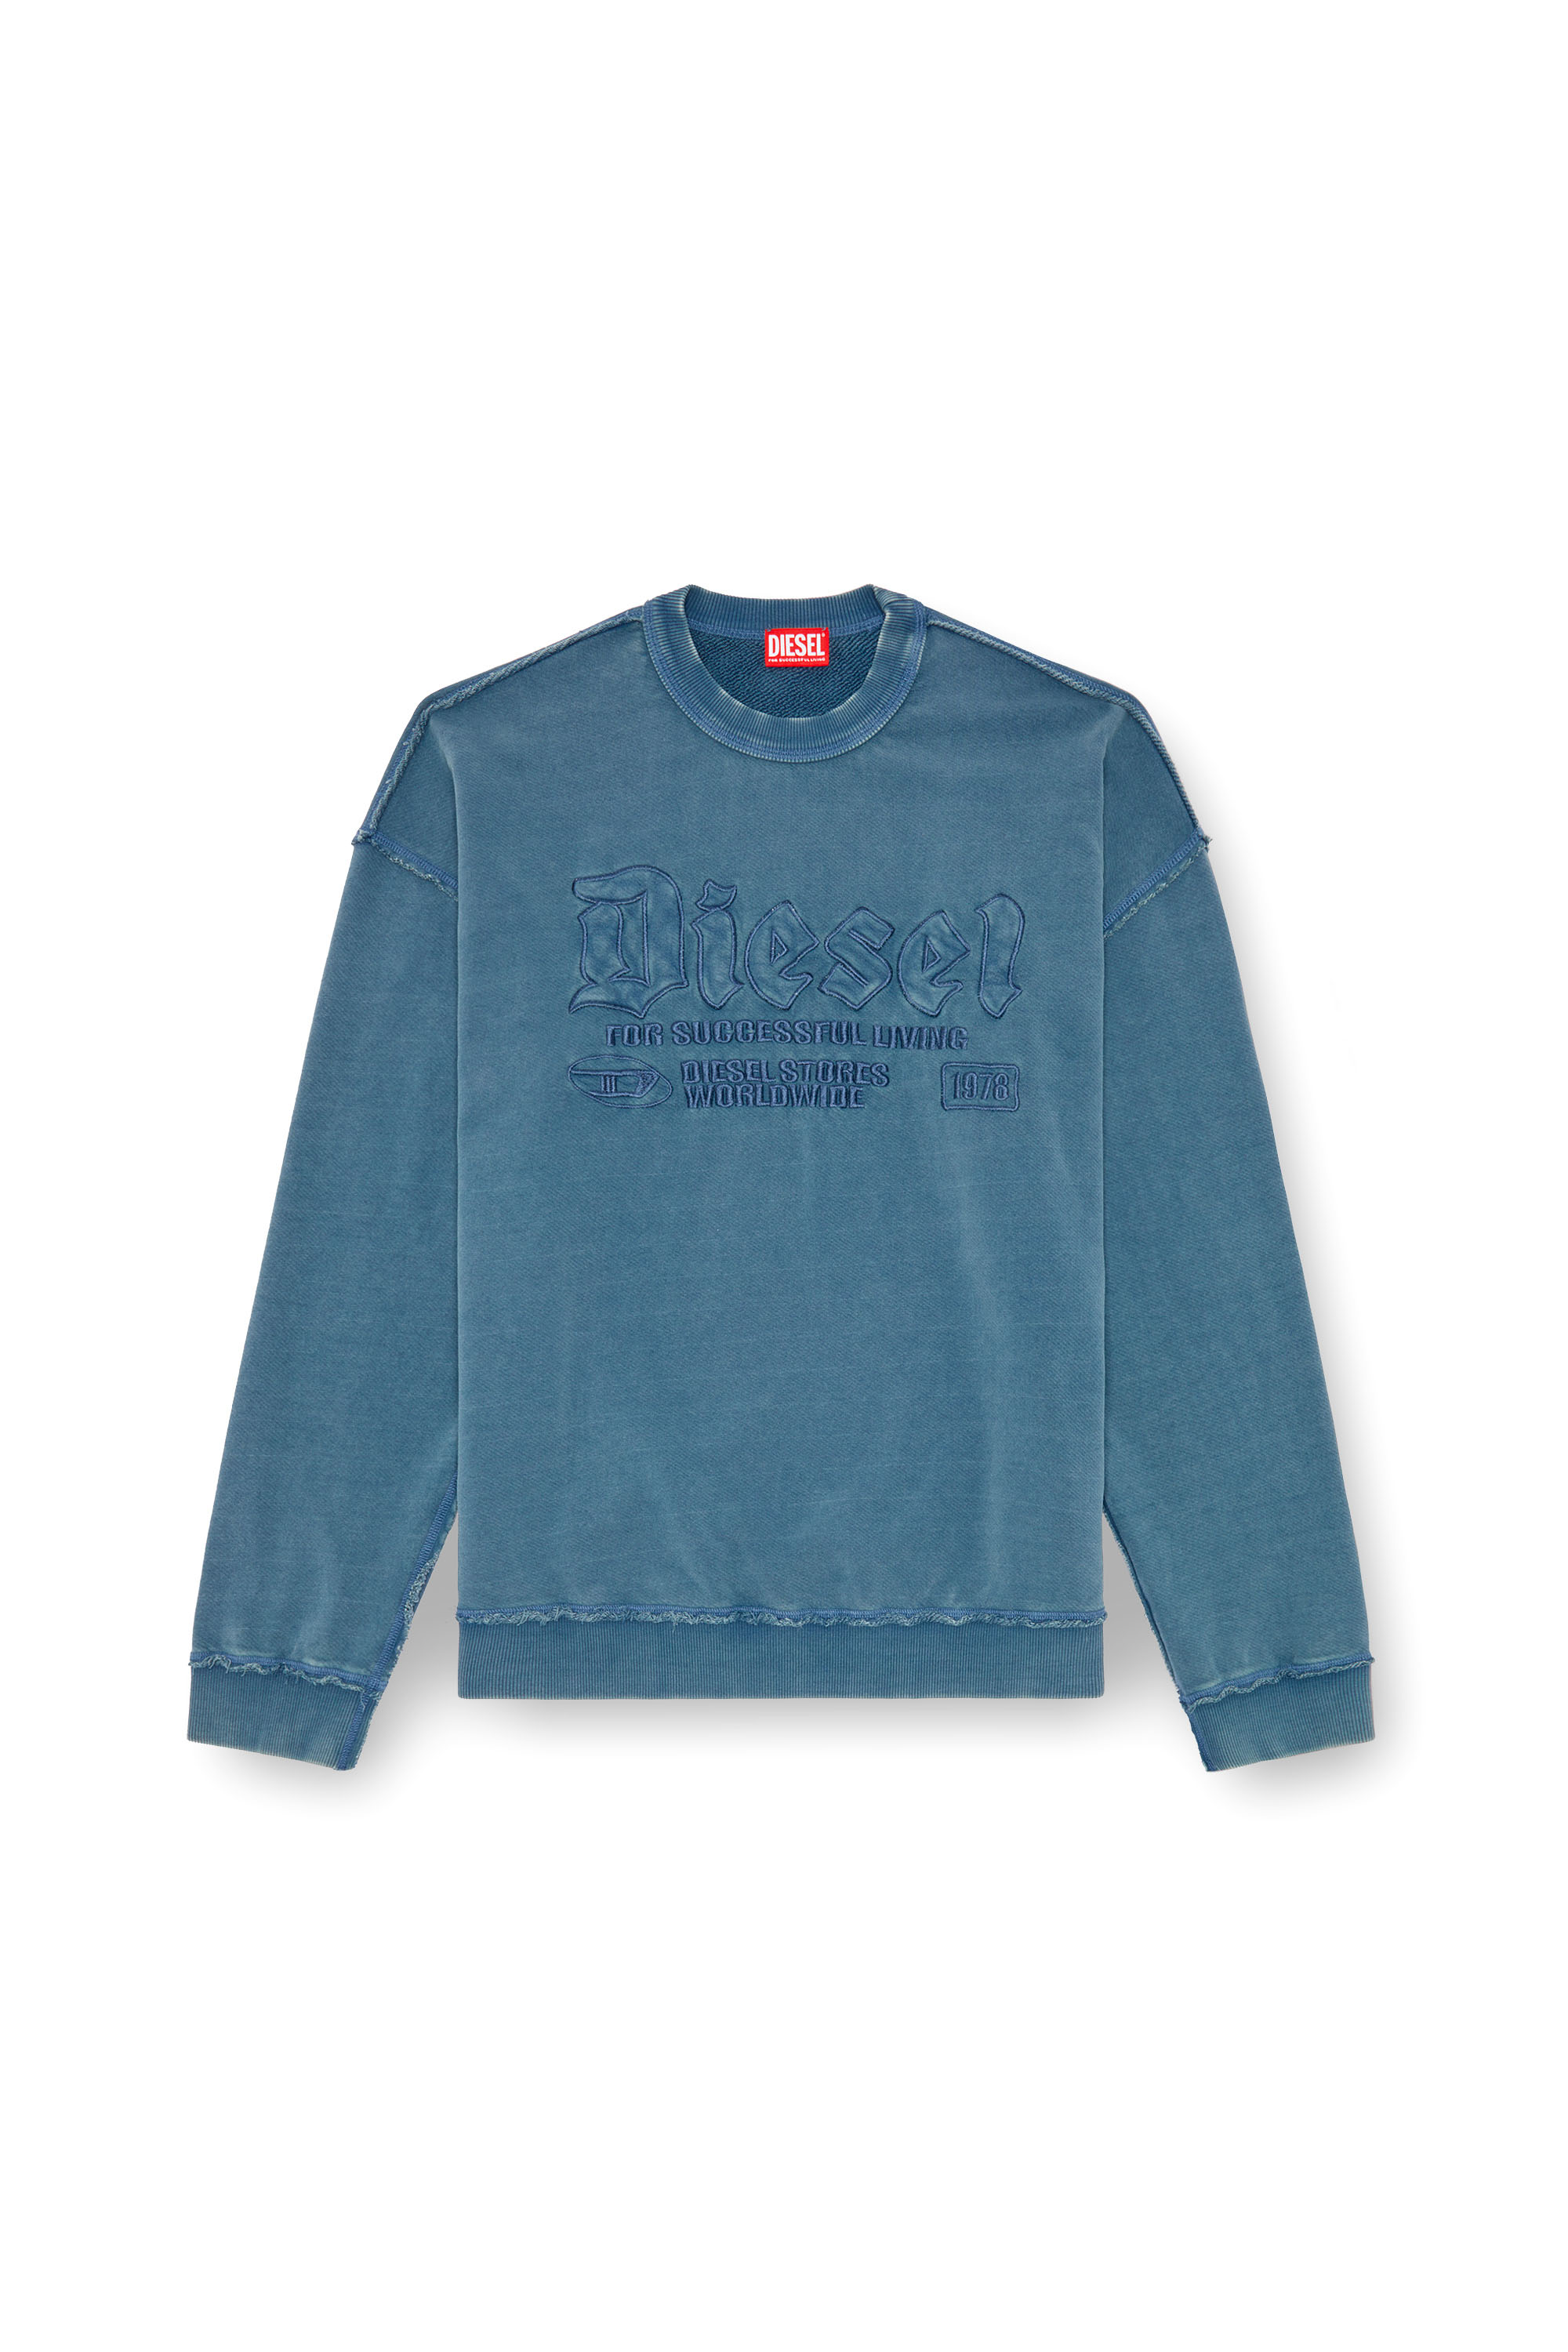 Diesel - S-BOXT-RAW, Homme Sweat-shirt avec logo brodé in Bleu - Image 3